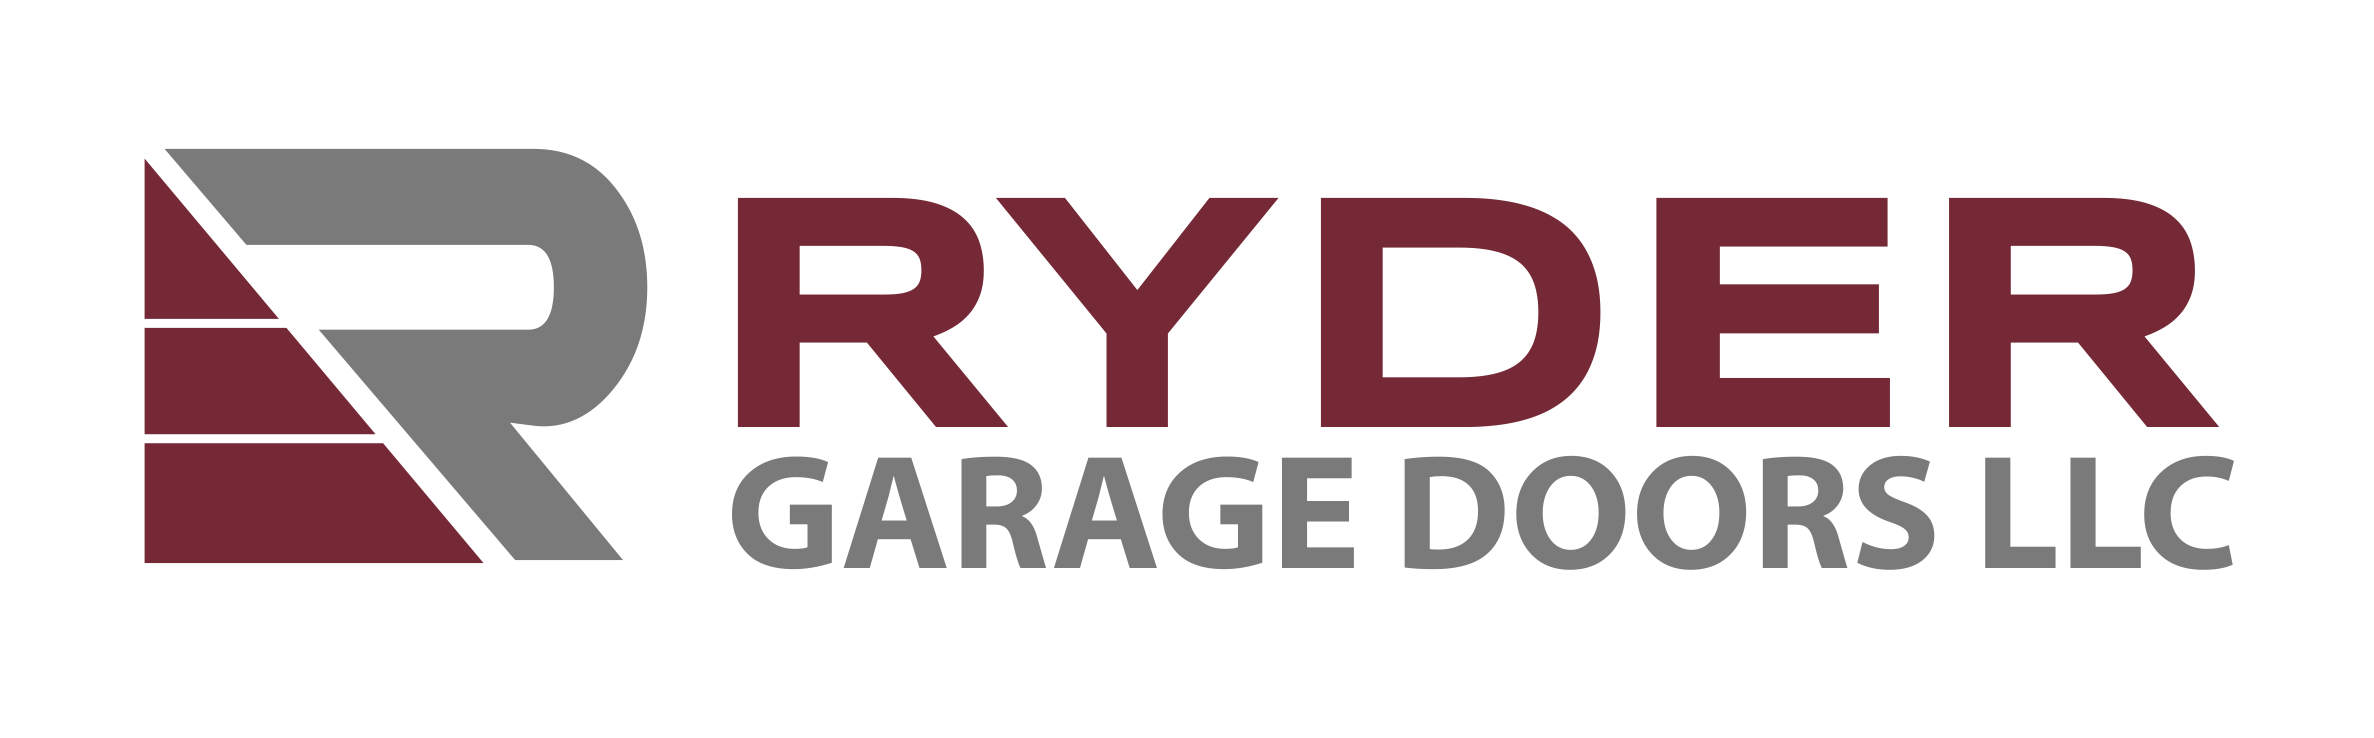 Ryder Garage Doors, LLC Logo